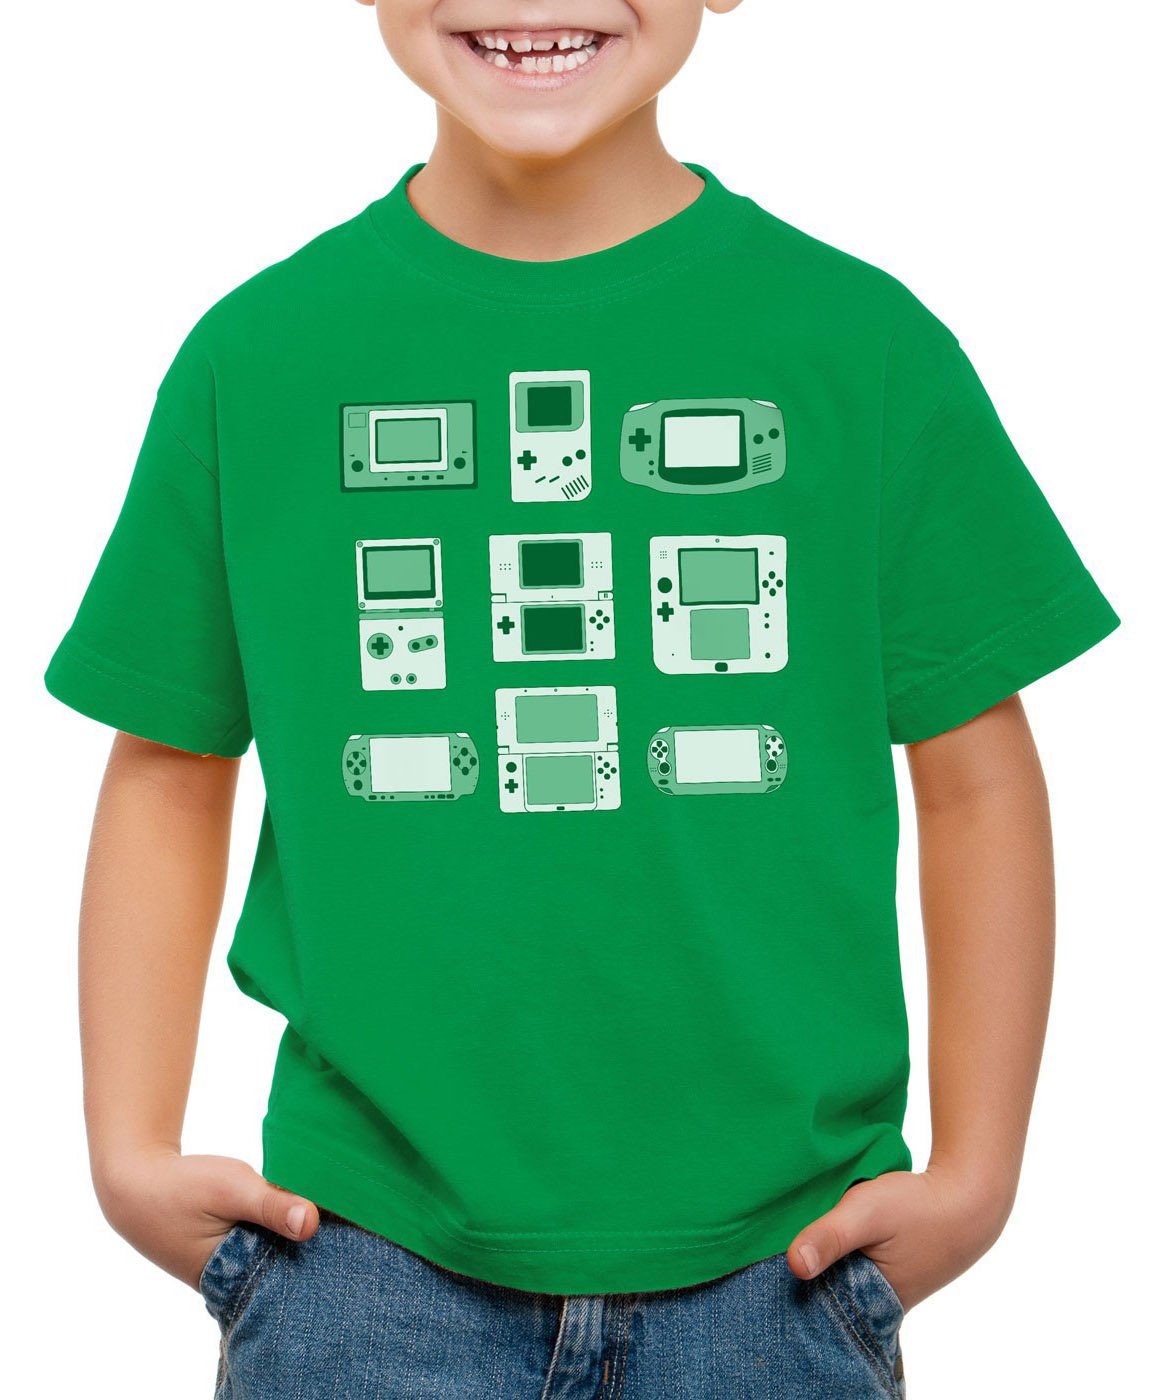 grün T-Shirt controller Konsole style3 spielekonsole Kinder videospiel Handheld Print-Shirt